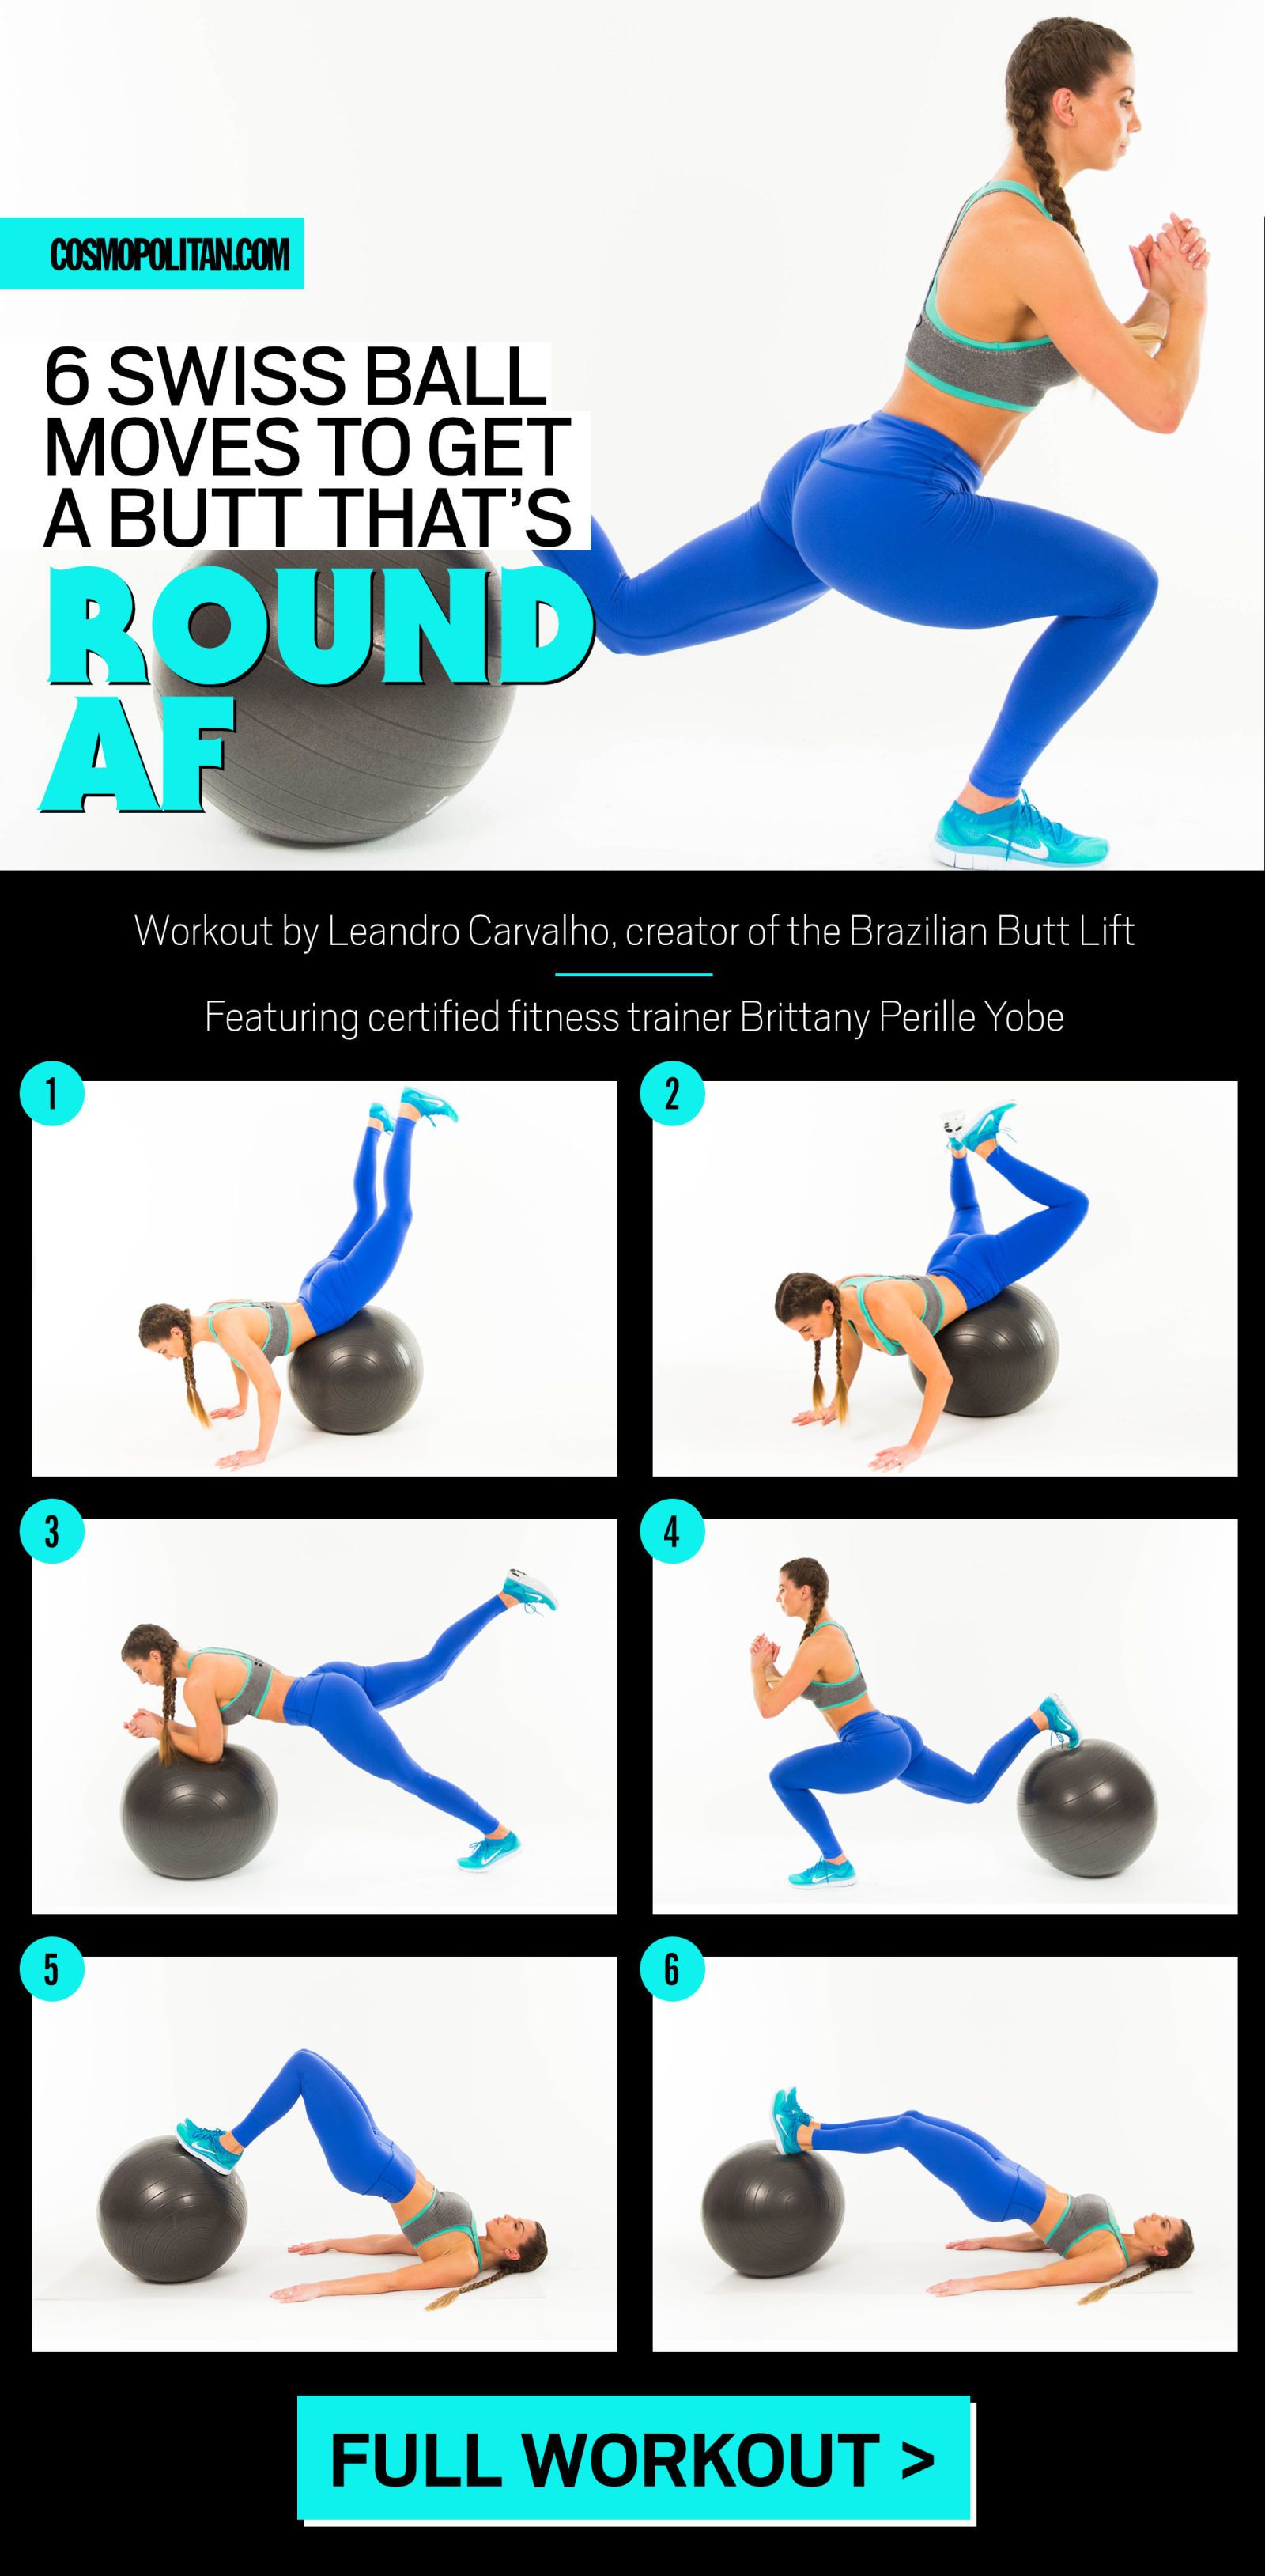 exercises using exercise ball